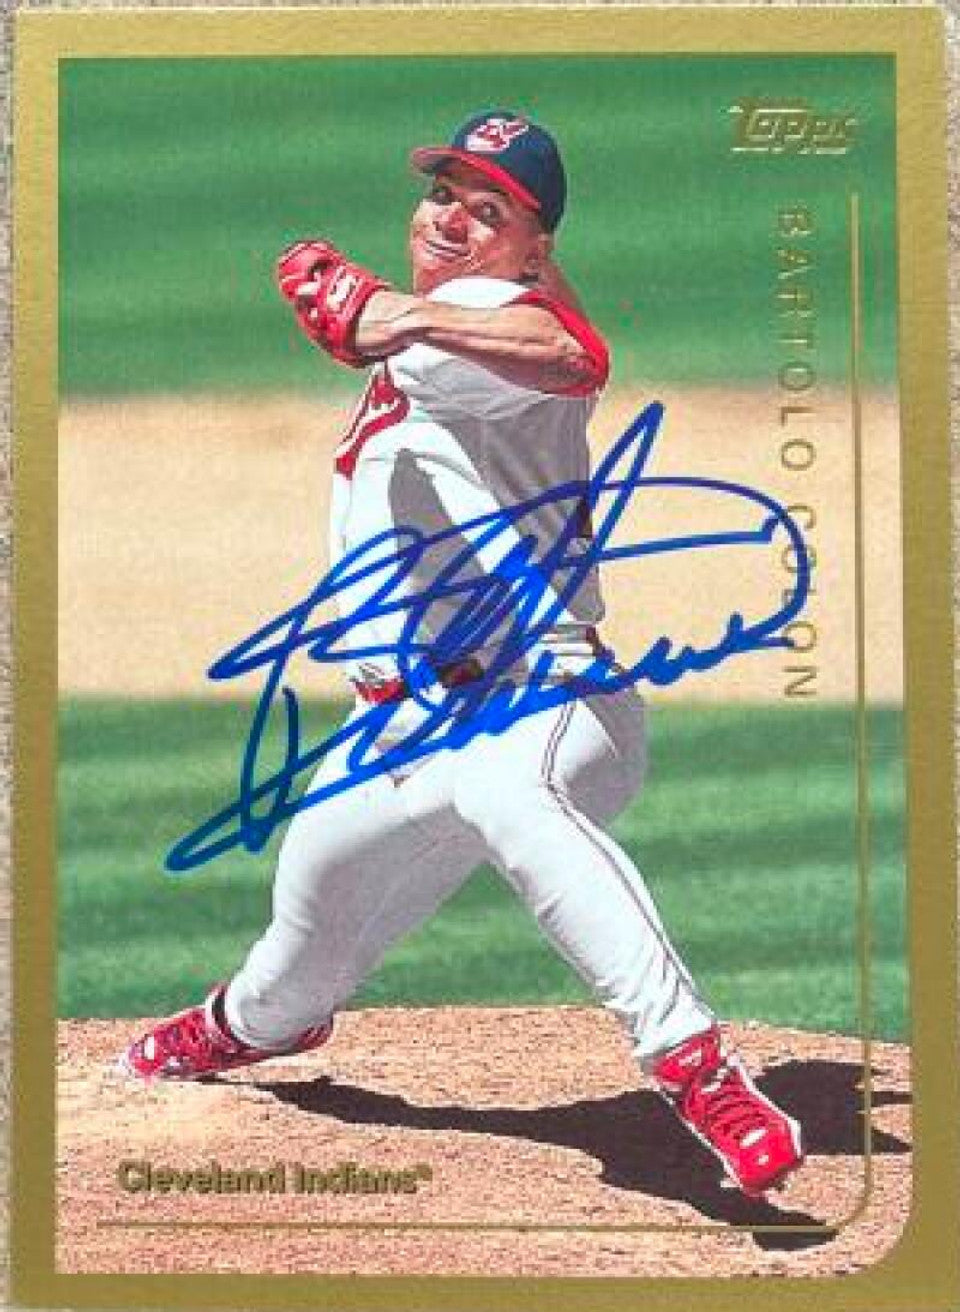 Bartolo Colon Signed 1999 Topps Baseball Card - Cleveland Indians